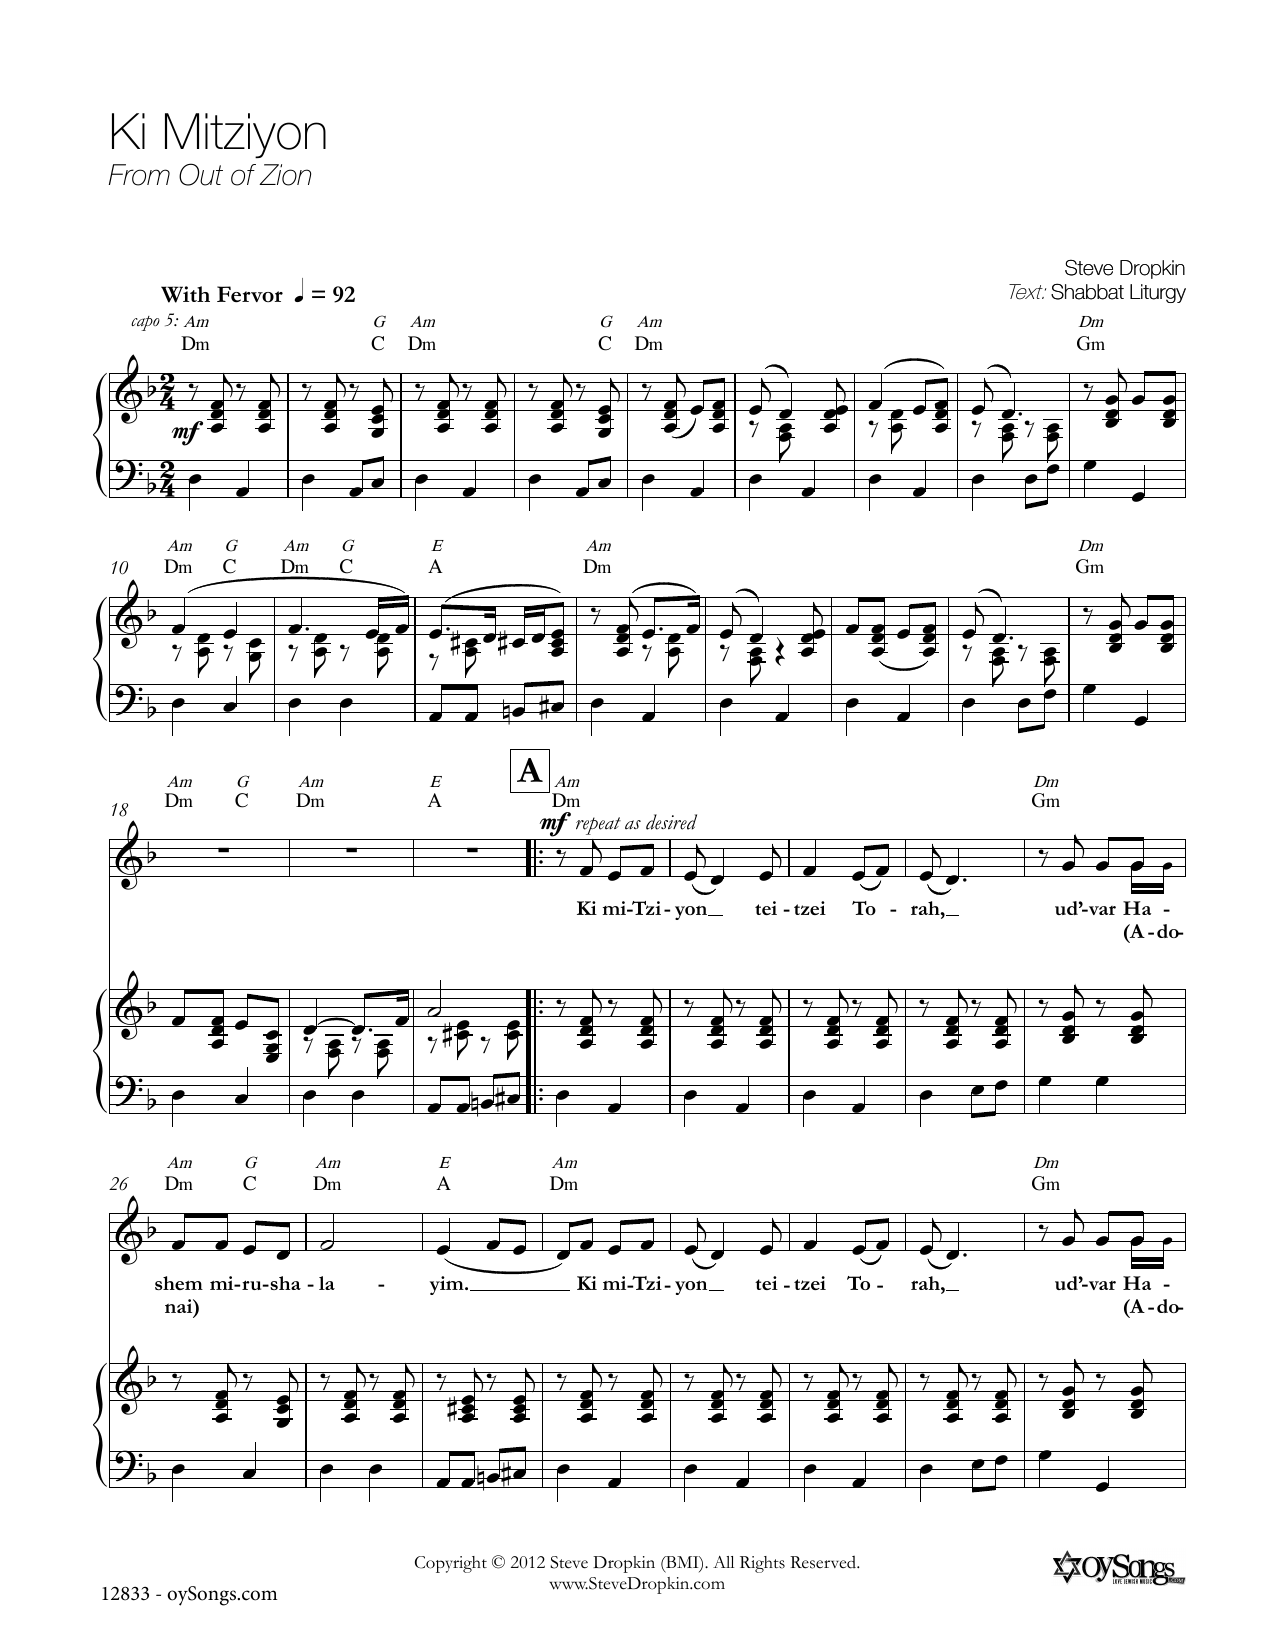 Steve Dropkin Ki Mitziyon Sheet Music Notes & Chords for Piano, Vocal & Guitar (Right-Hand Melody) - Download or Print PDF